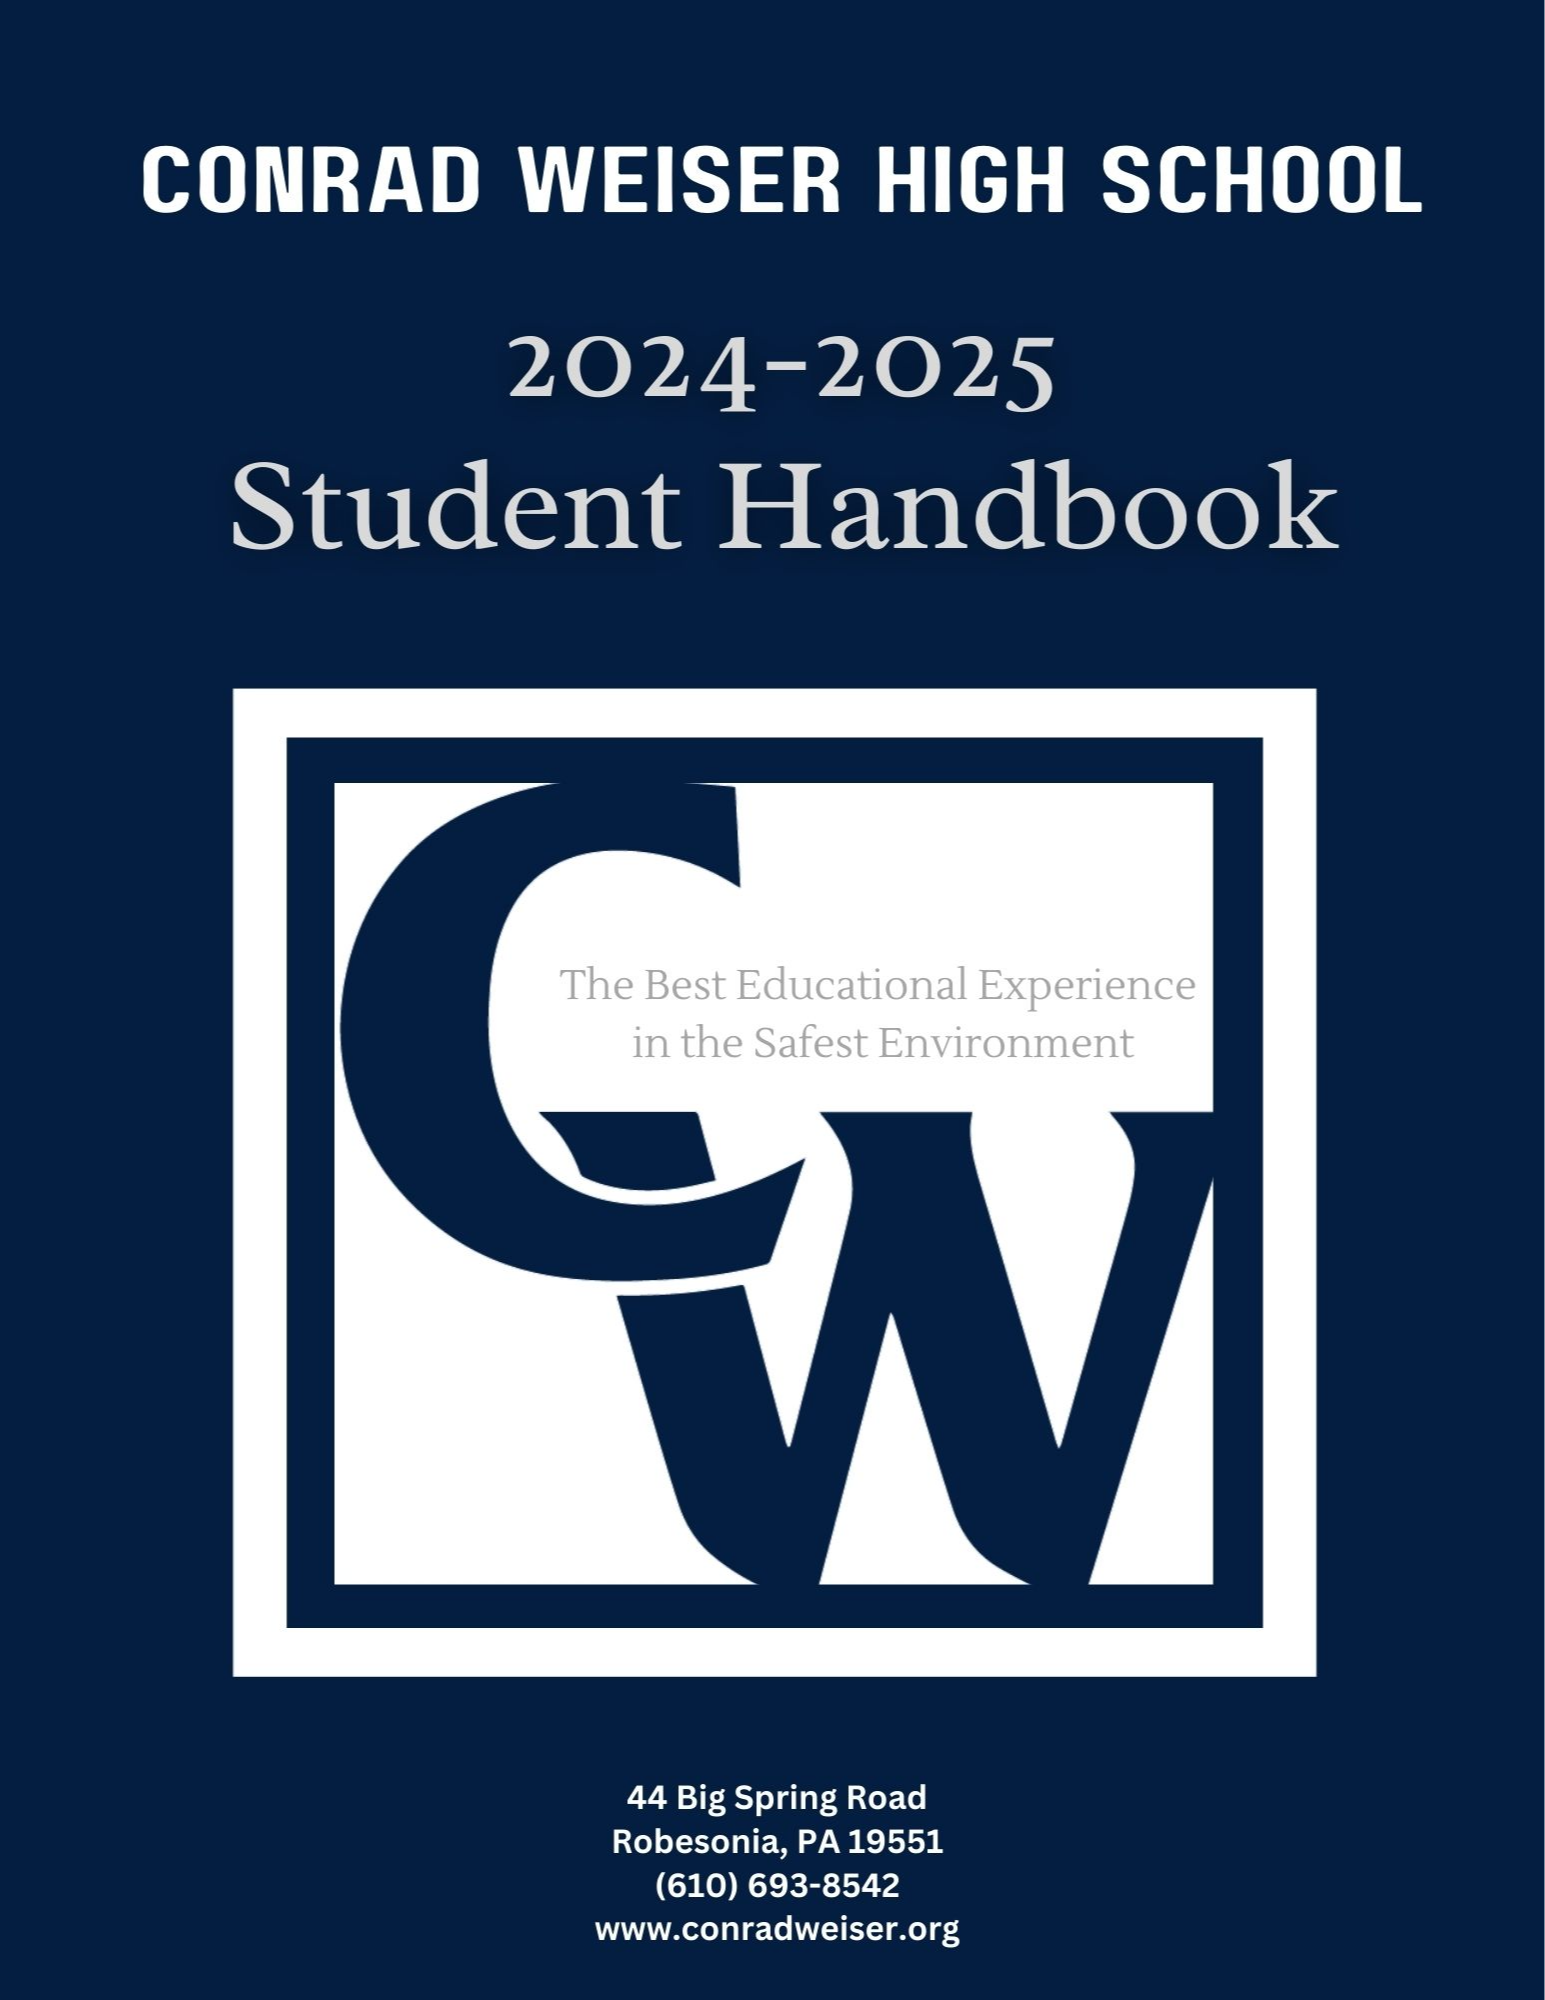 CWHS student handbook 24-25